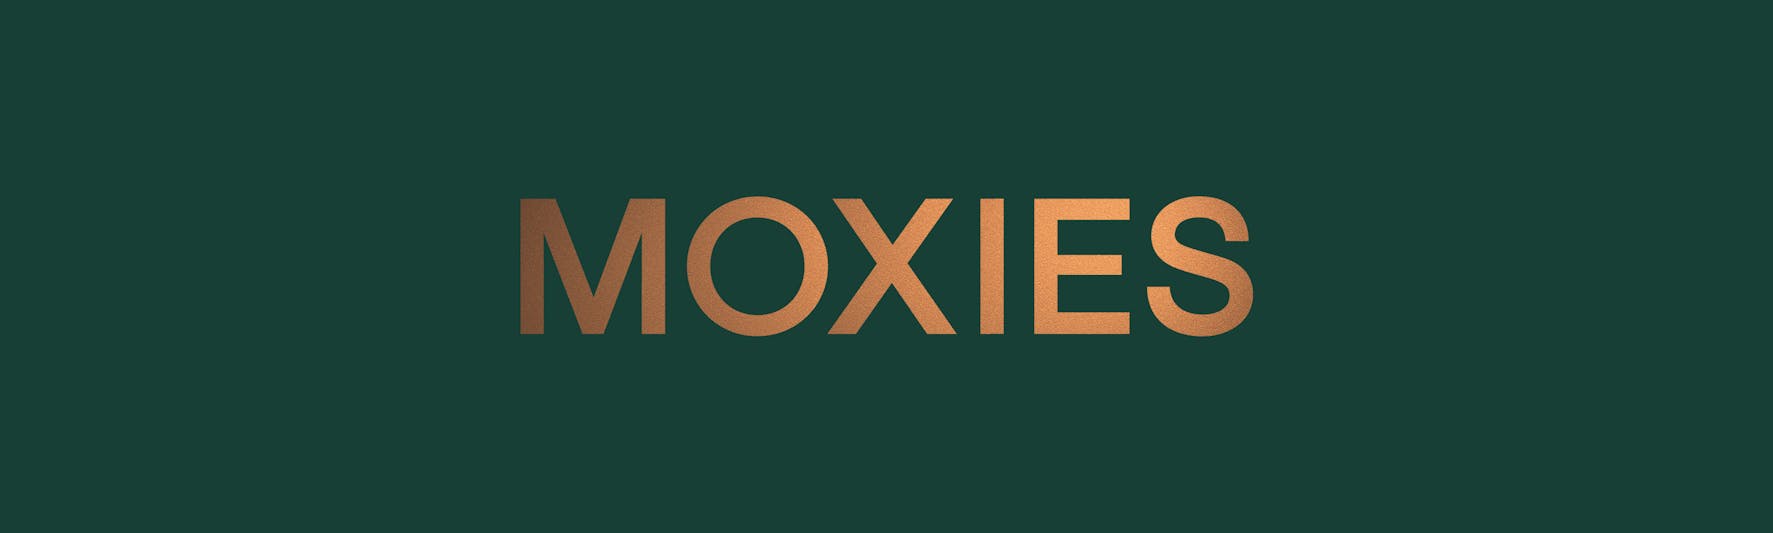 A New Era of Moxies